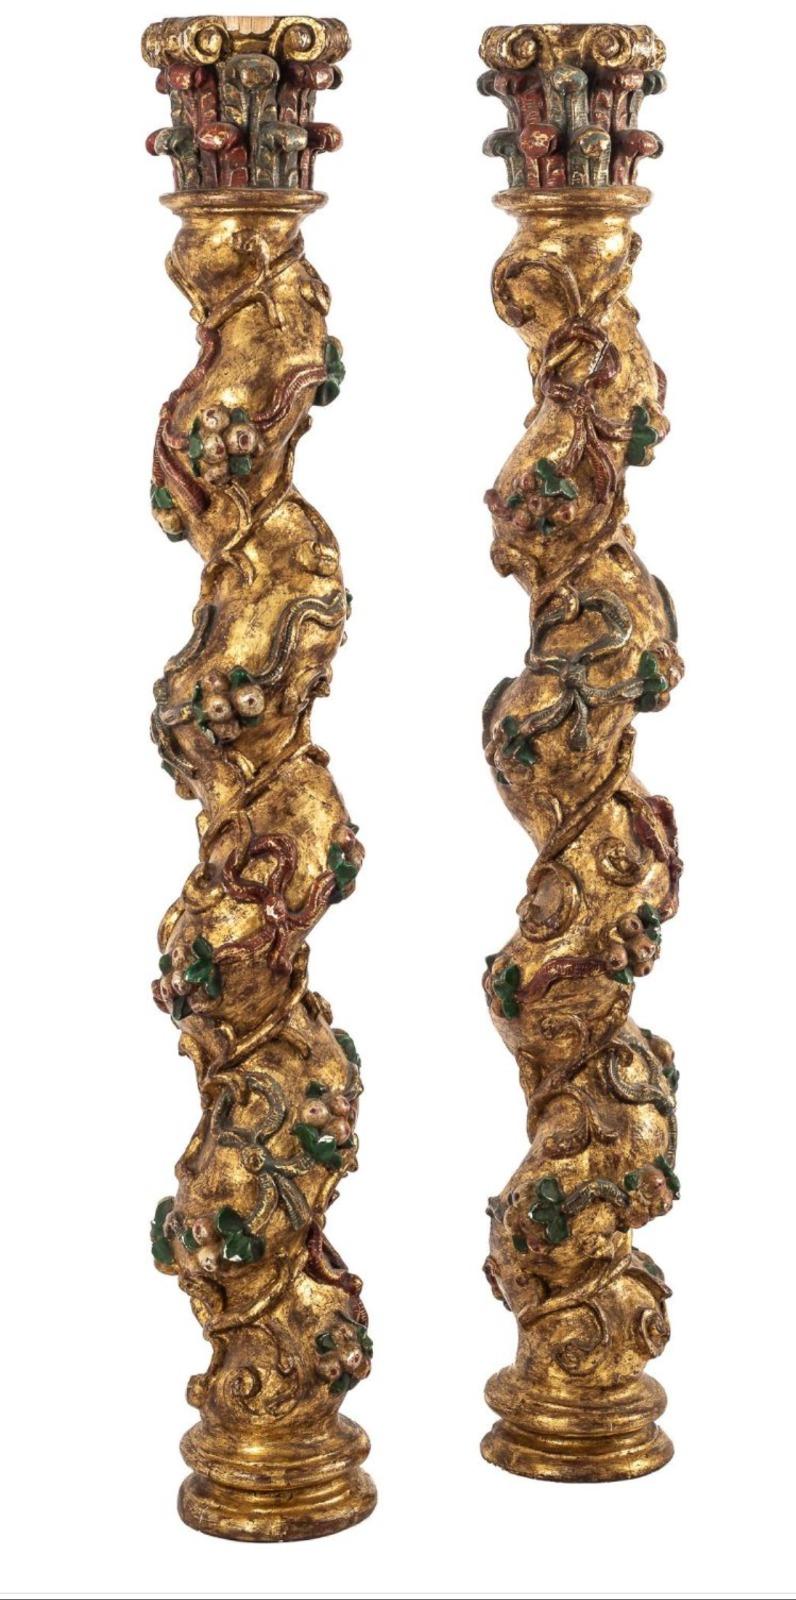 Hand-Crafted Pair of Spanish Solomonic Columns, 18th Century